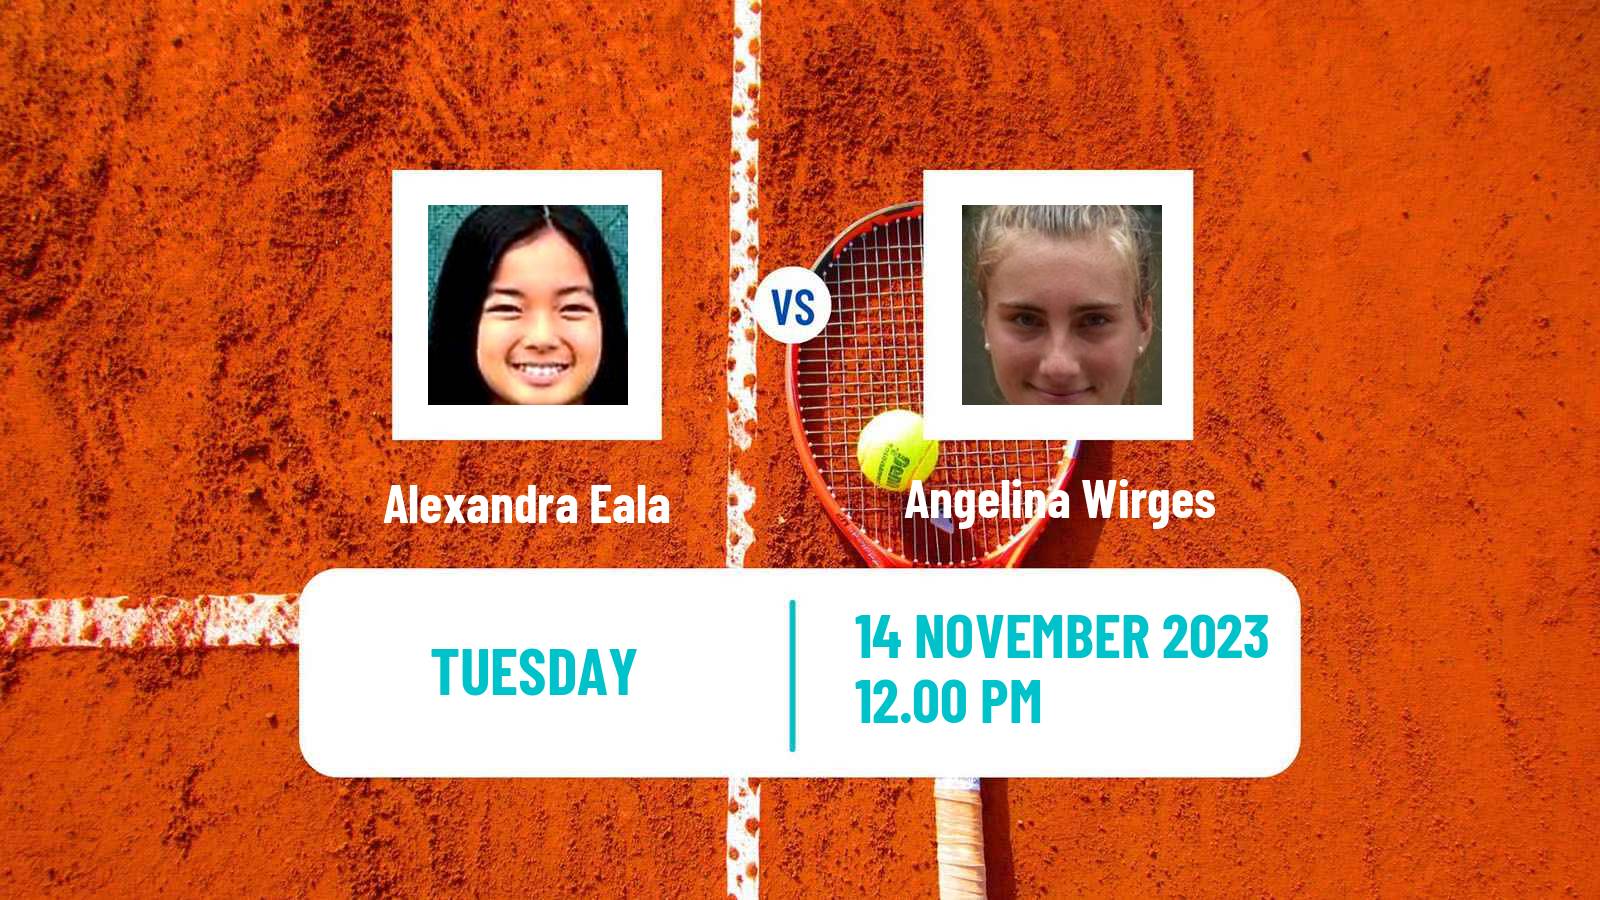 Tennis ITF W40 Petange Women Alexandra Eala - Angelina Wirges